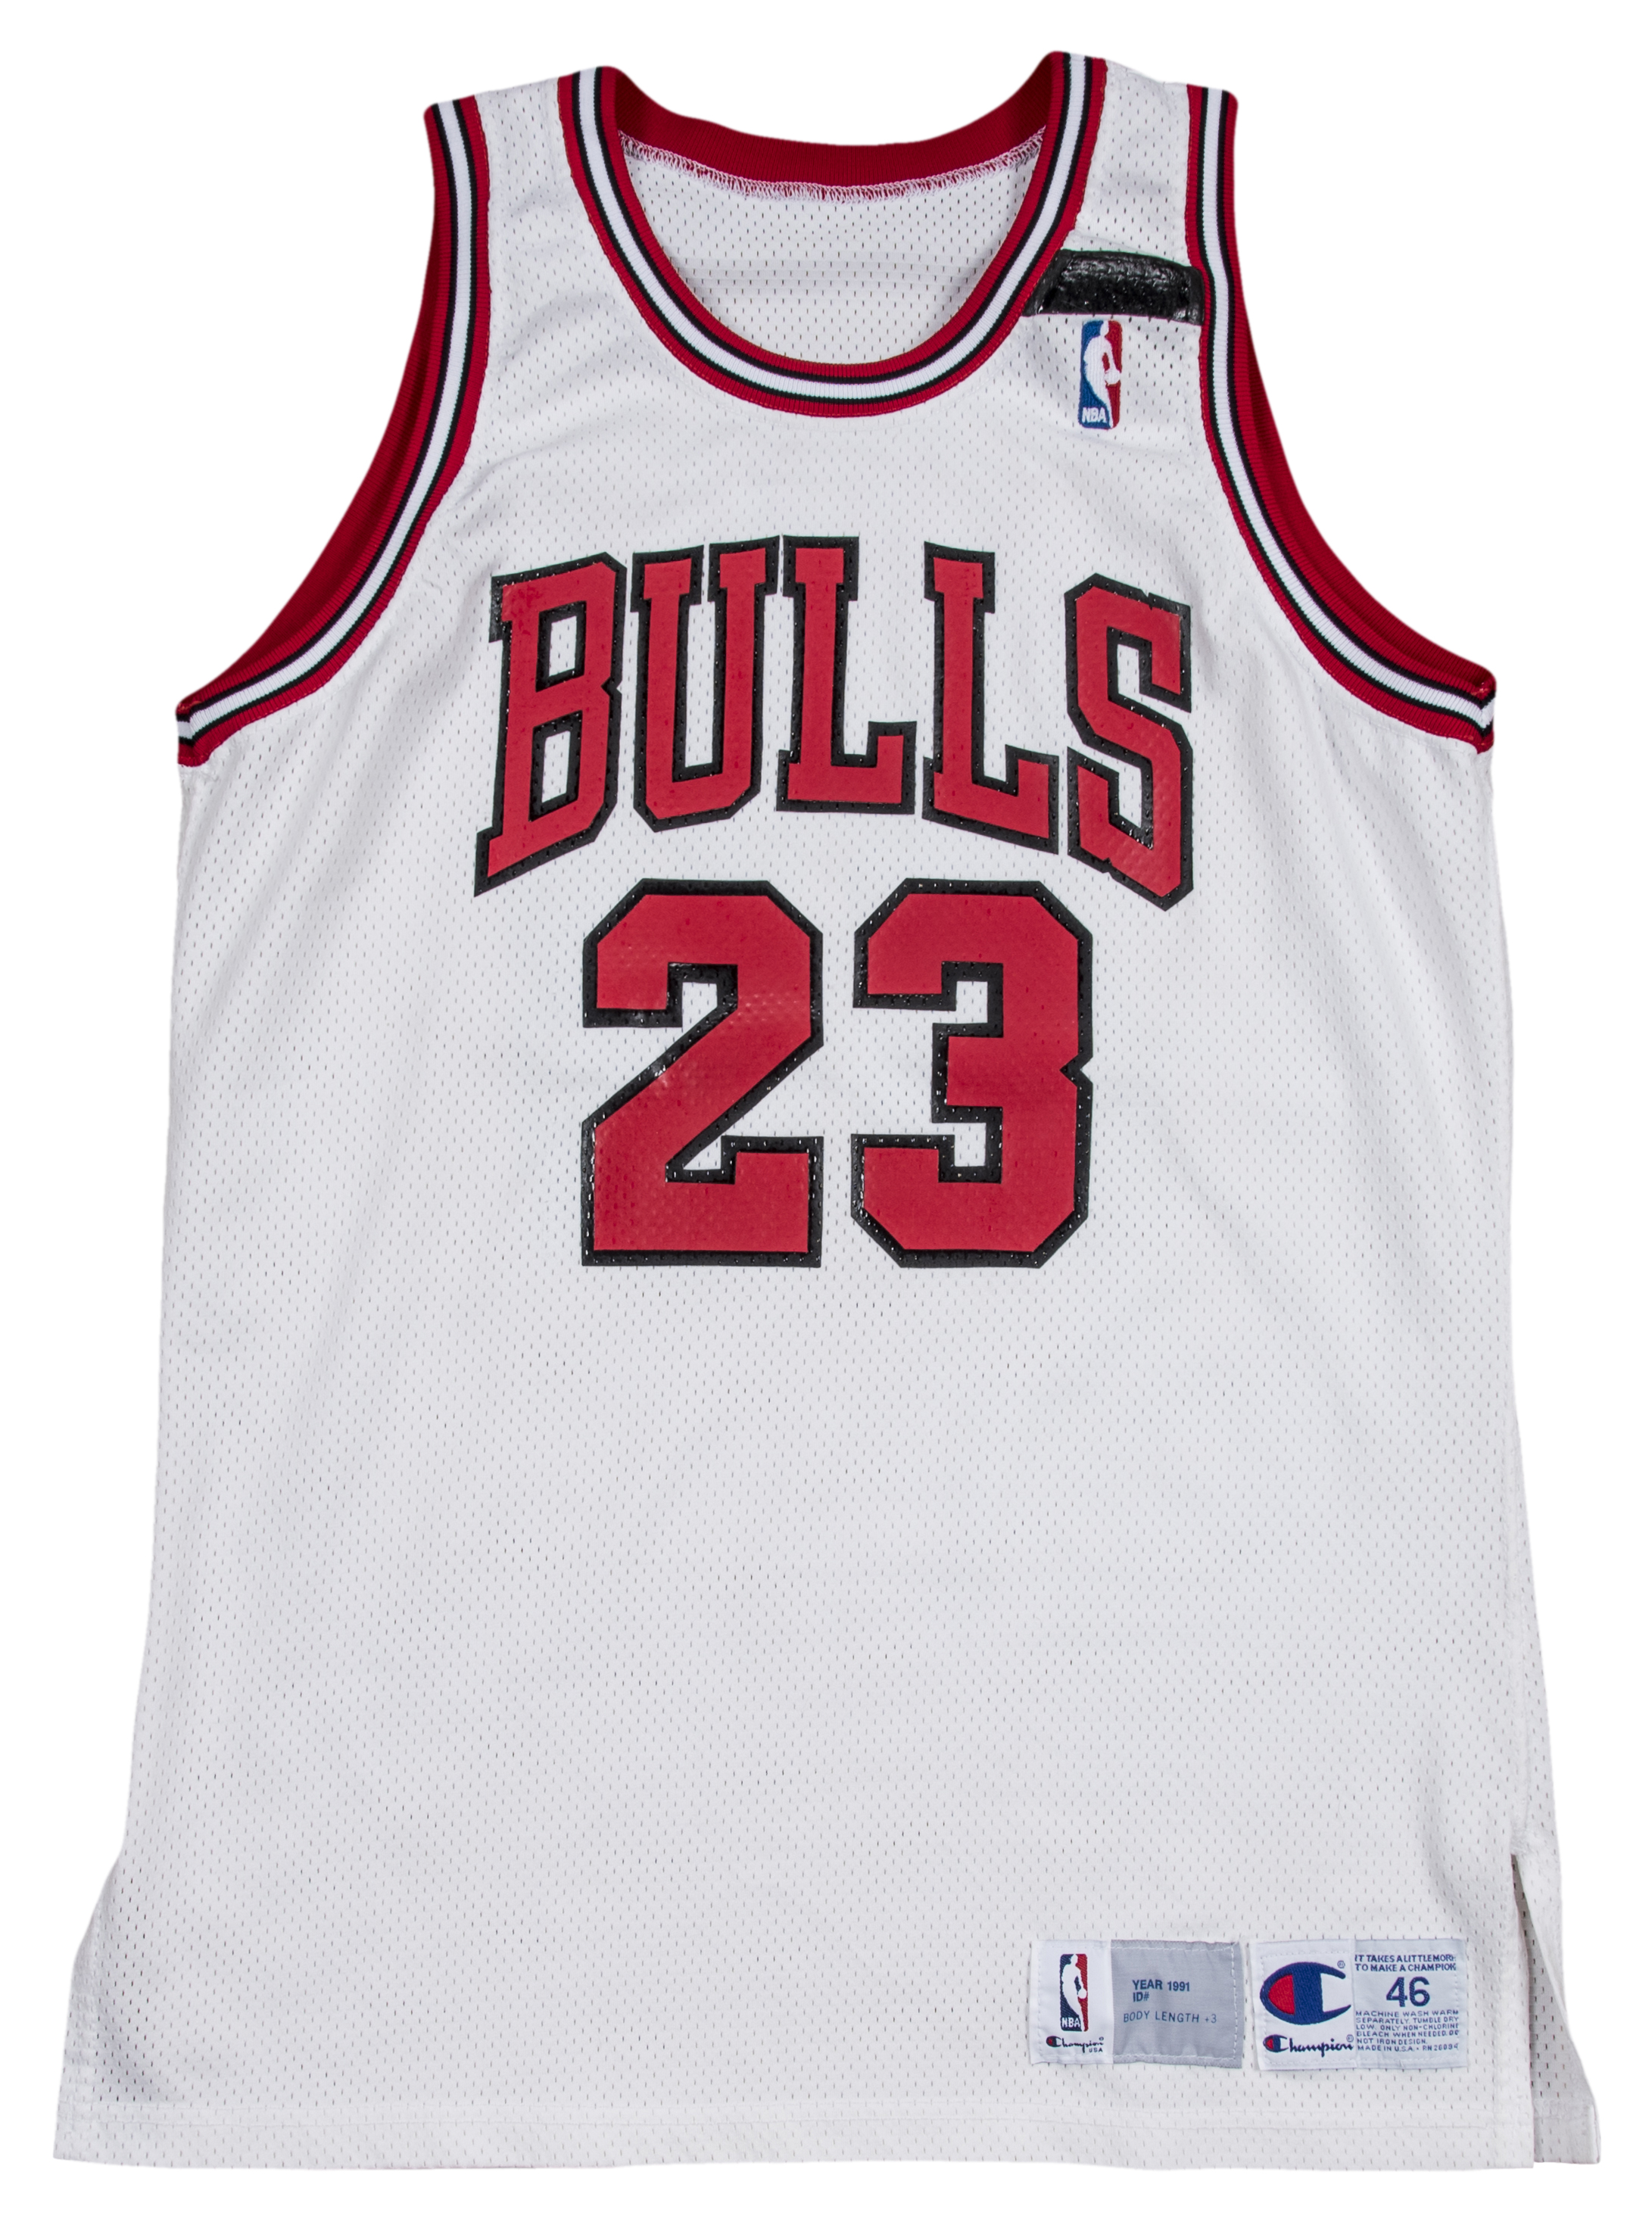 1991 bulls jersey